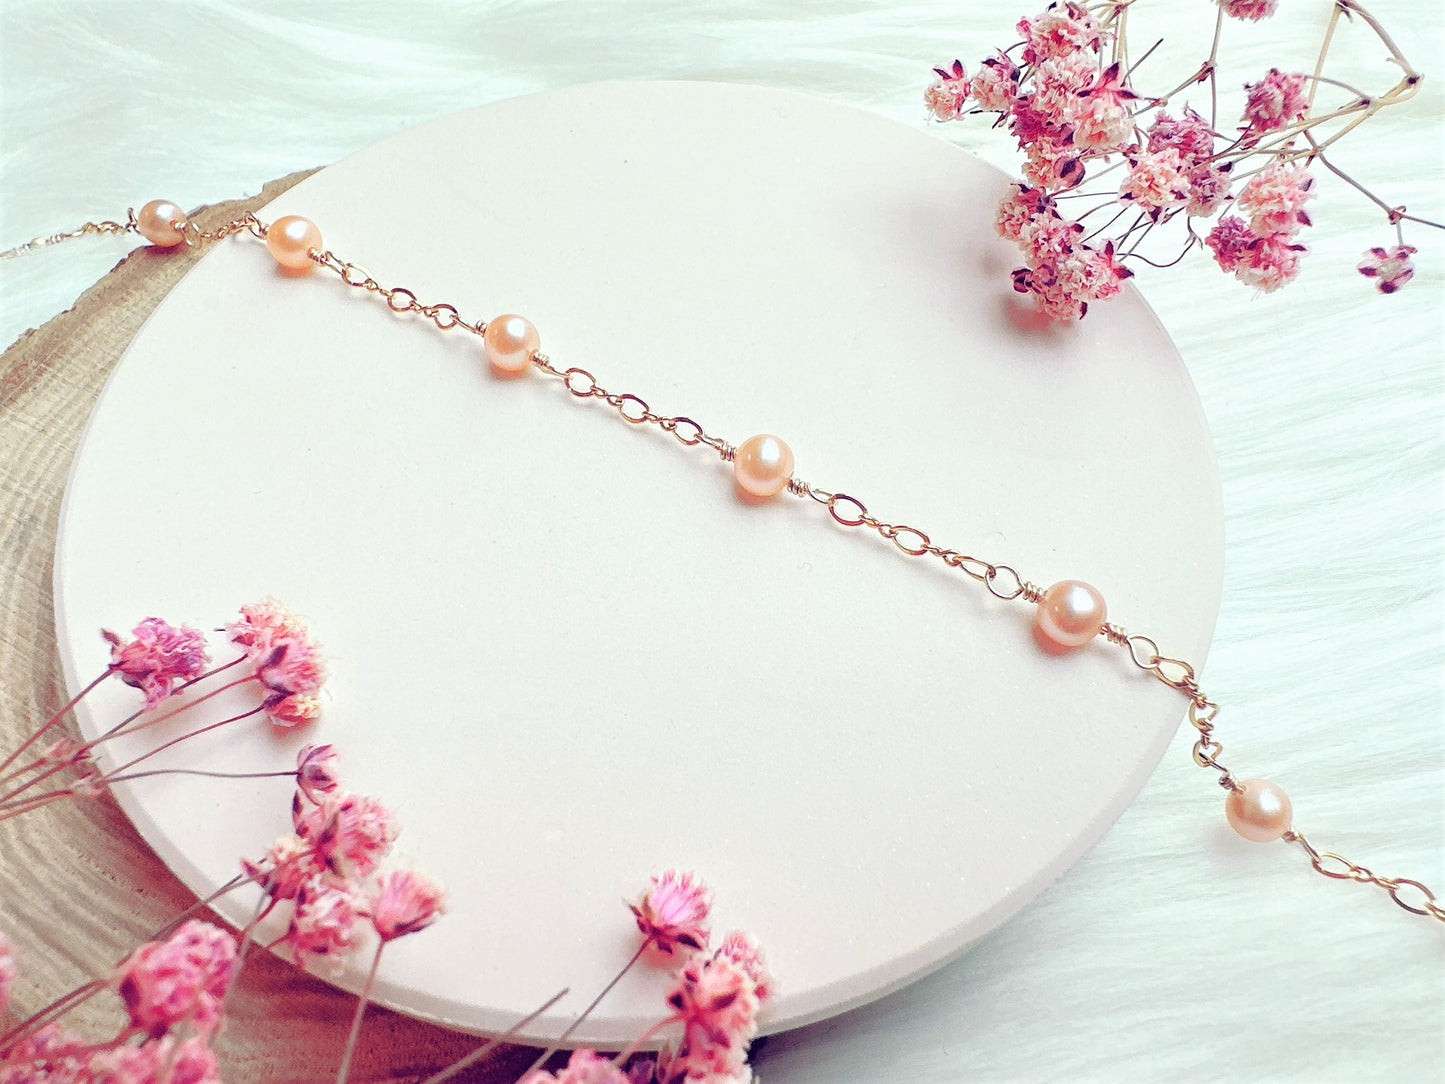 Pink Freshwater Pearl Bracelet